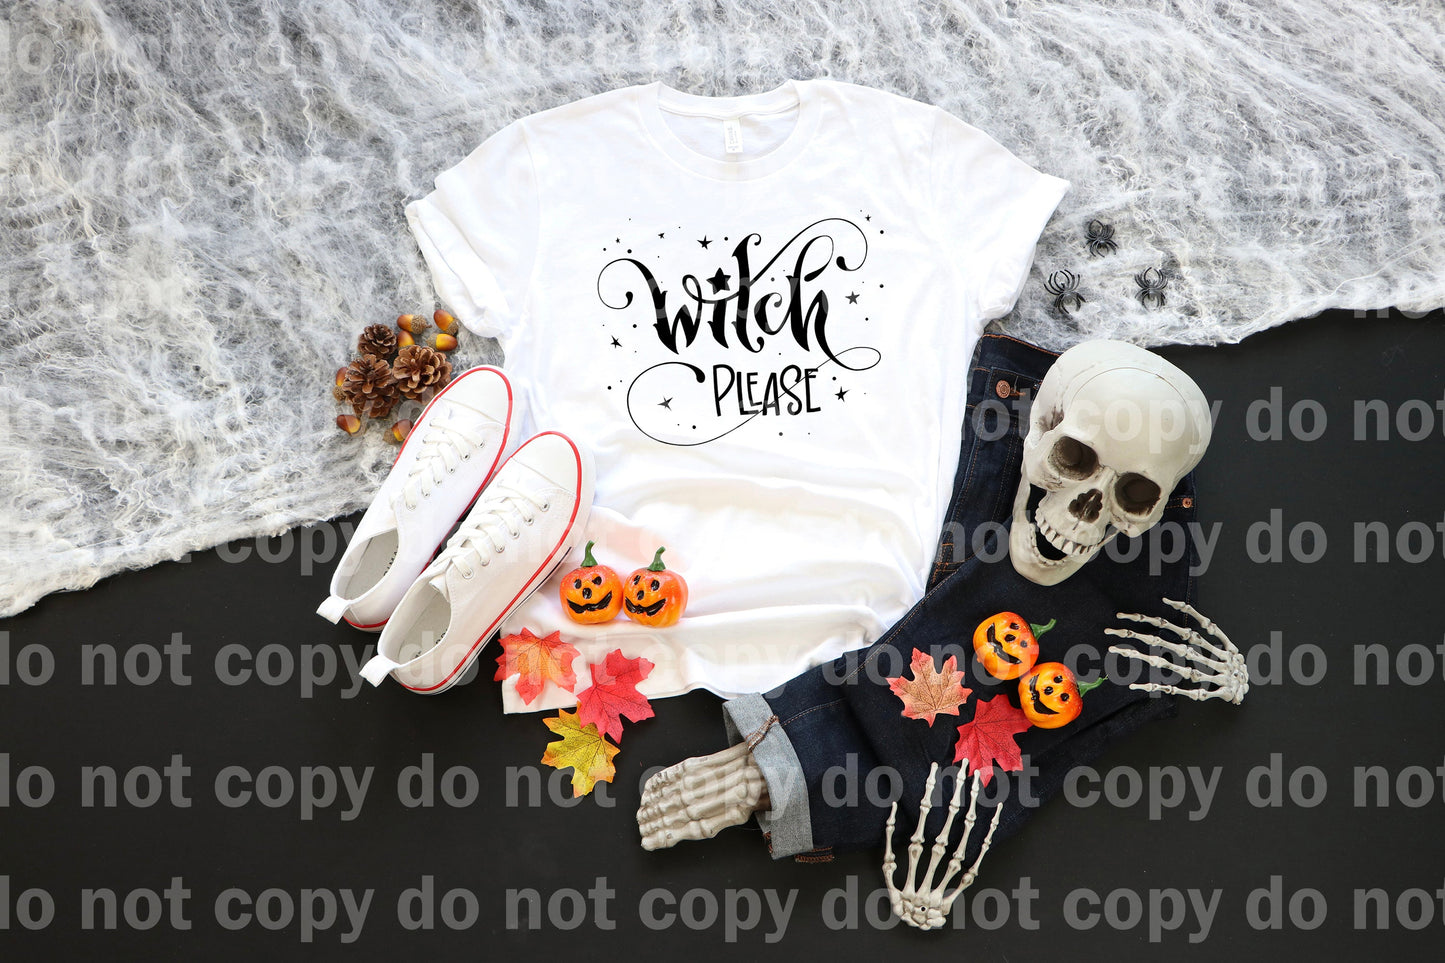 Witch Please Tipografía Black Dream Impresión o Impresión por Sublimación